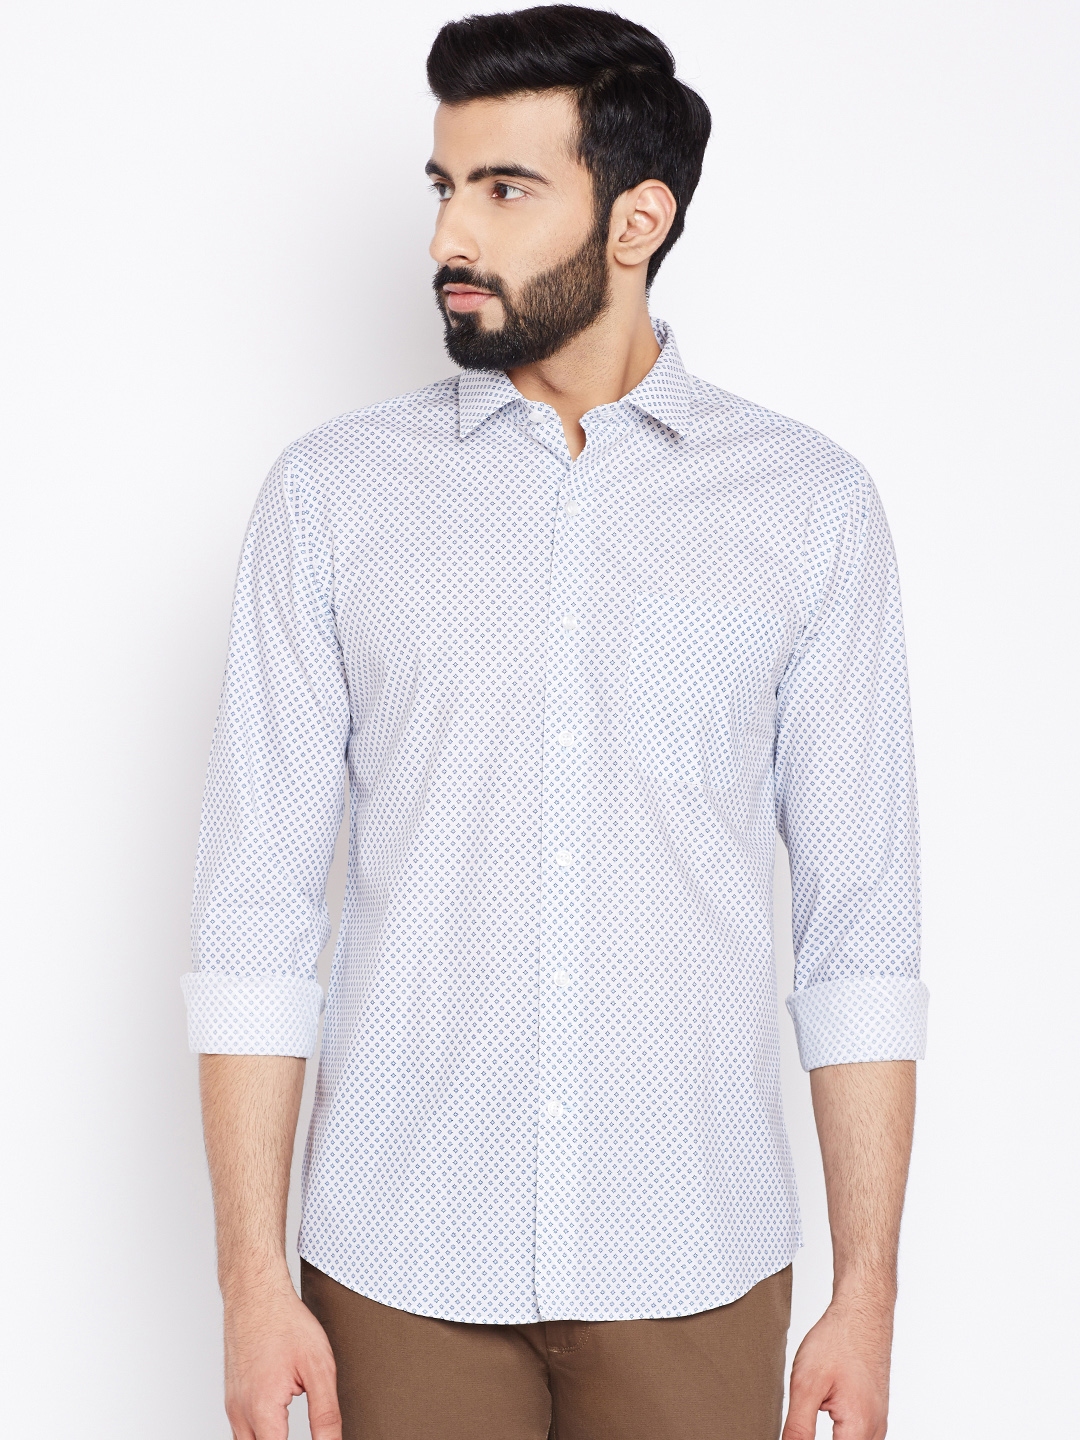 Buy Wills Lifestyle Men White & Blue Slim Fit Printed Casual Shirt ...